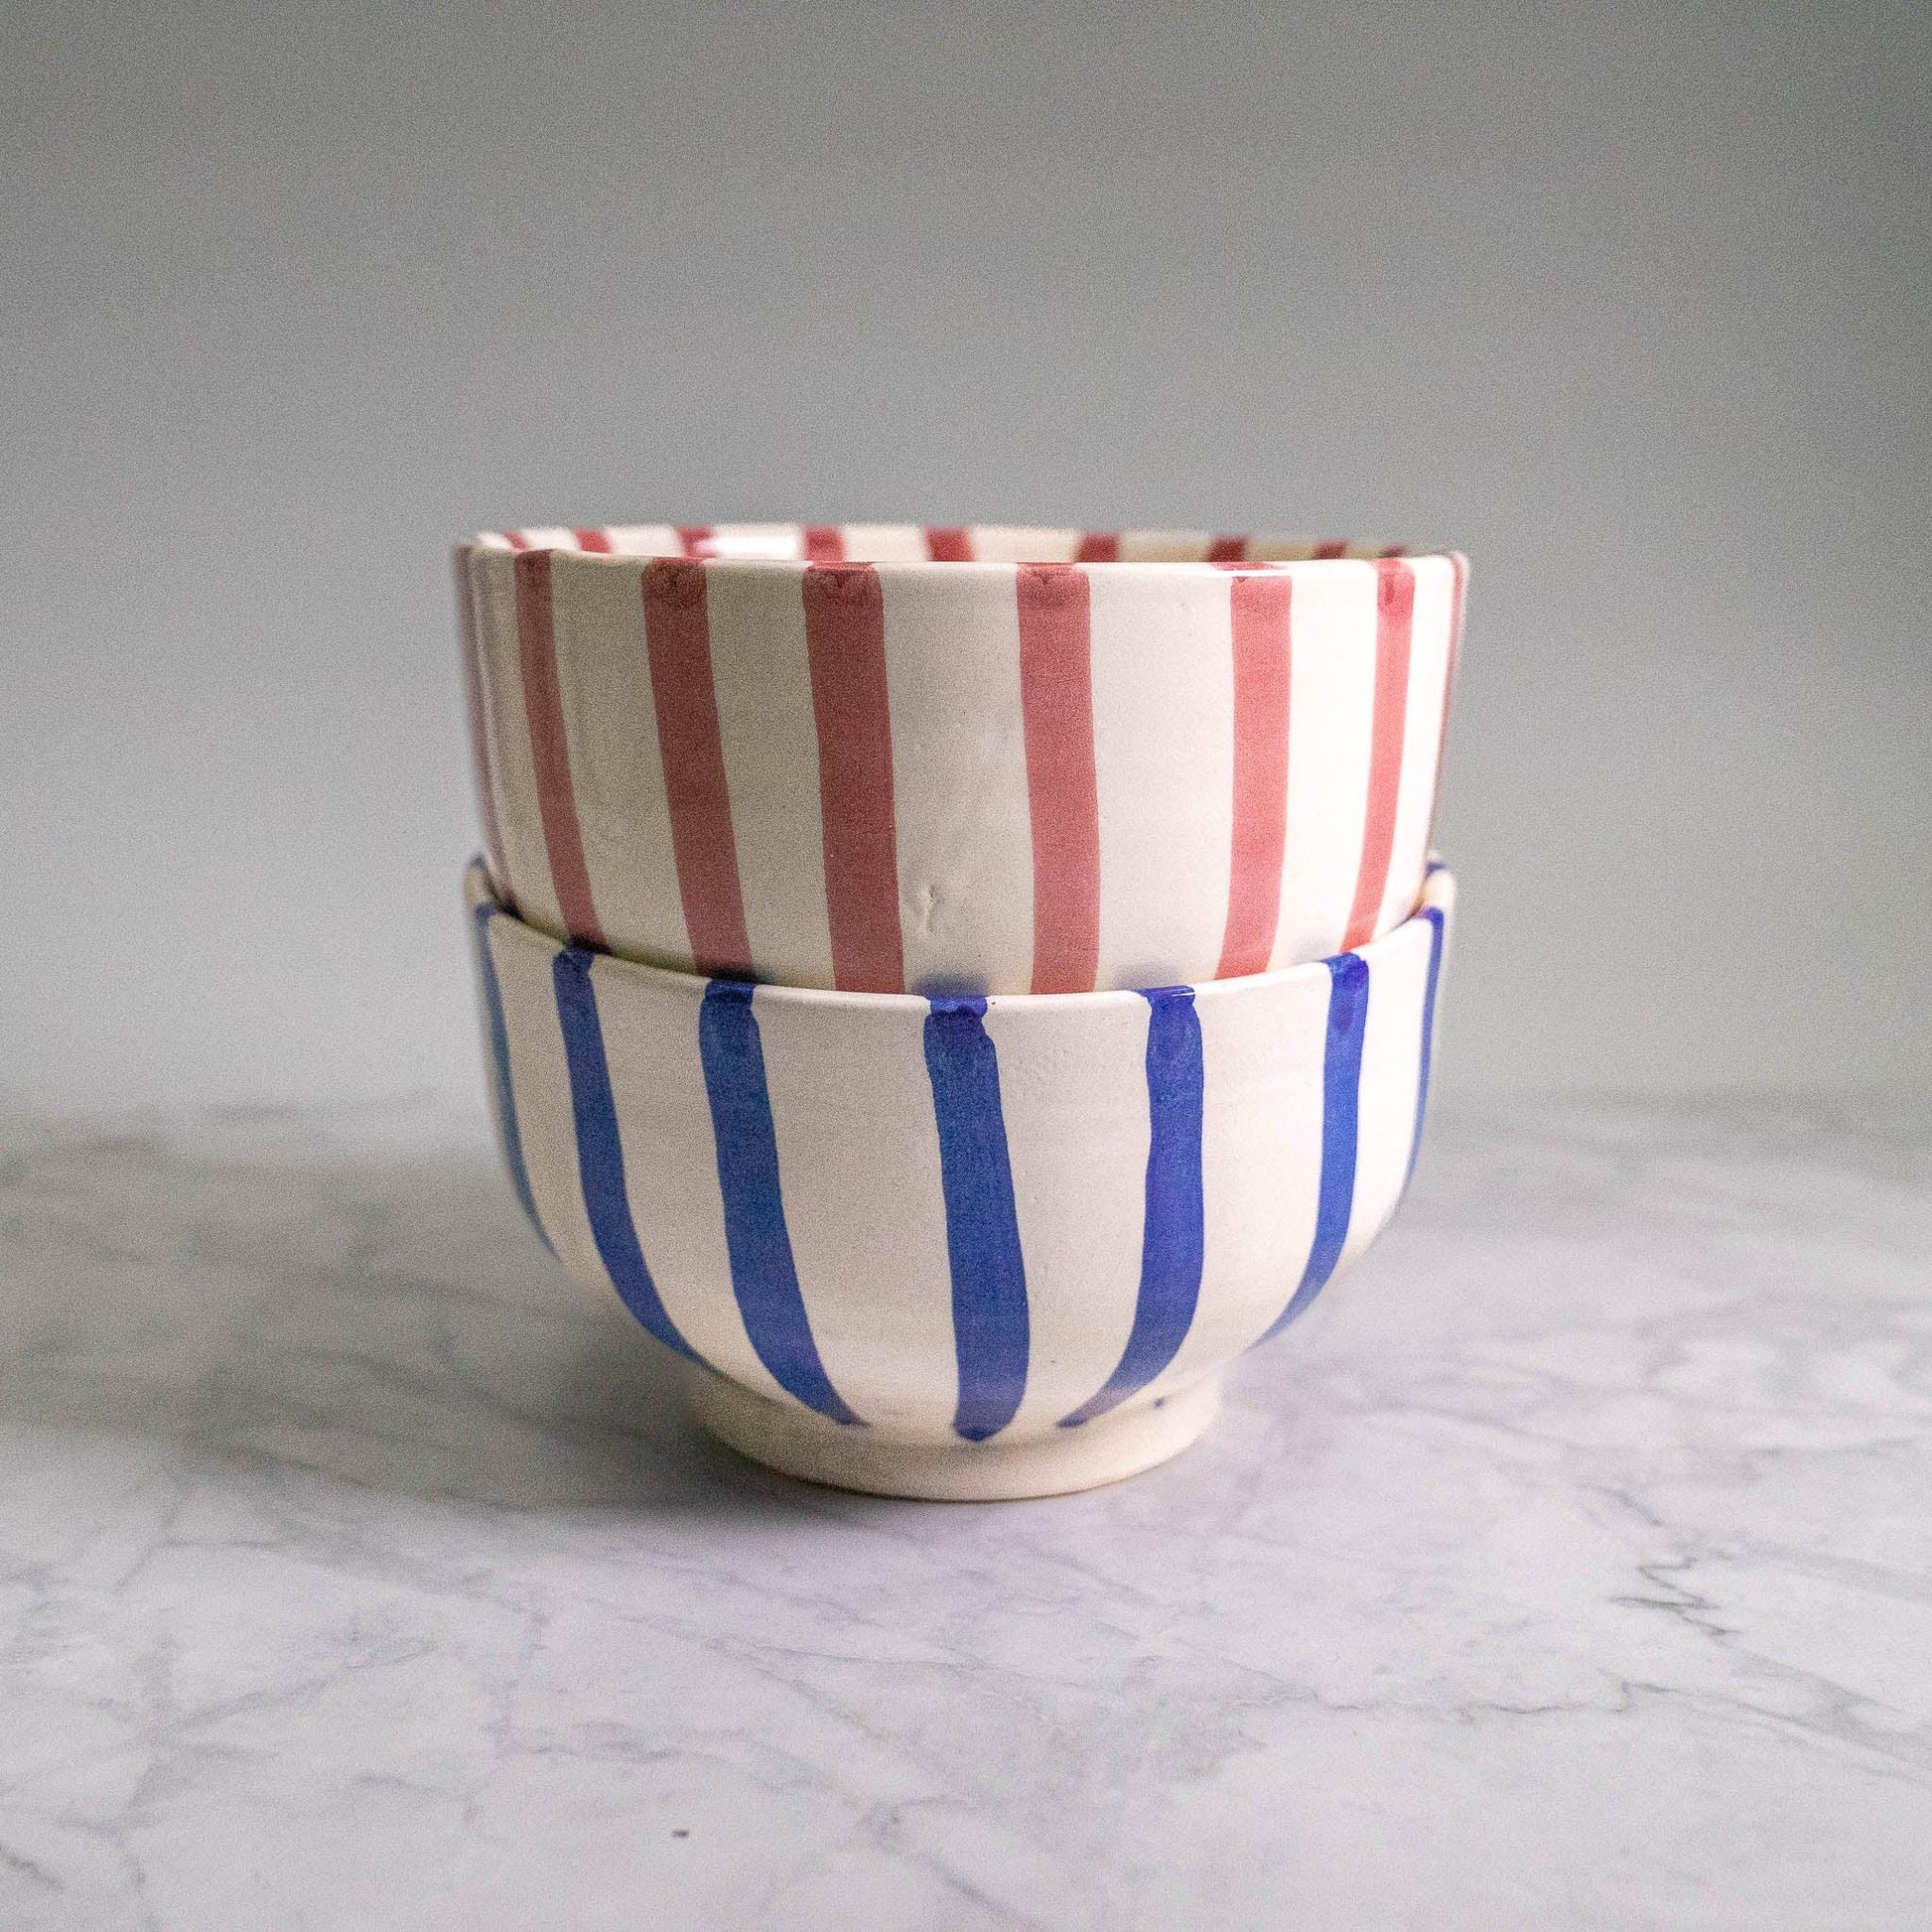 Bowl Stripes Blue 12cm - safi home design